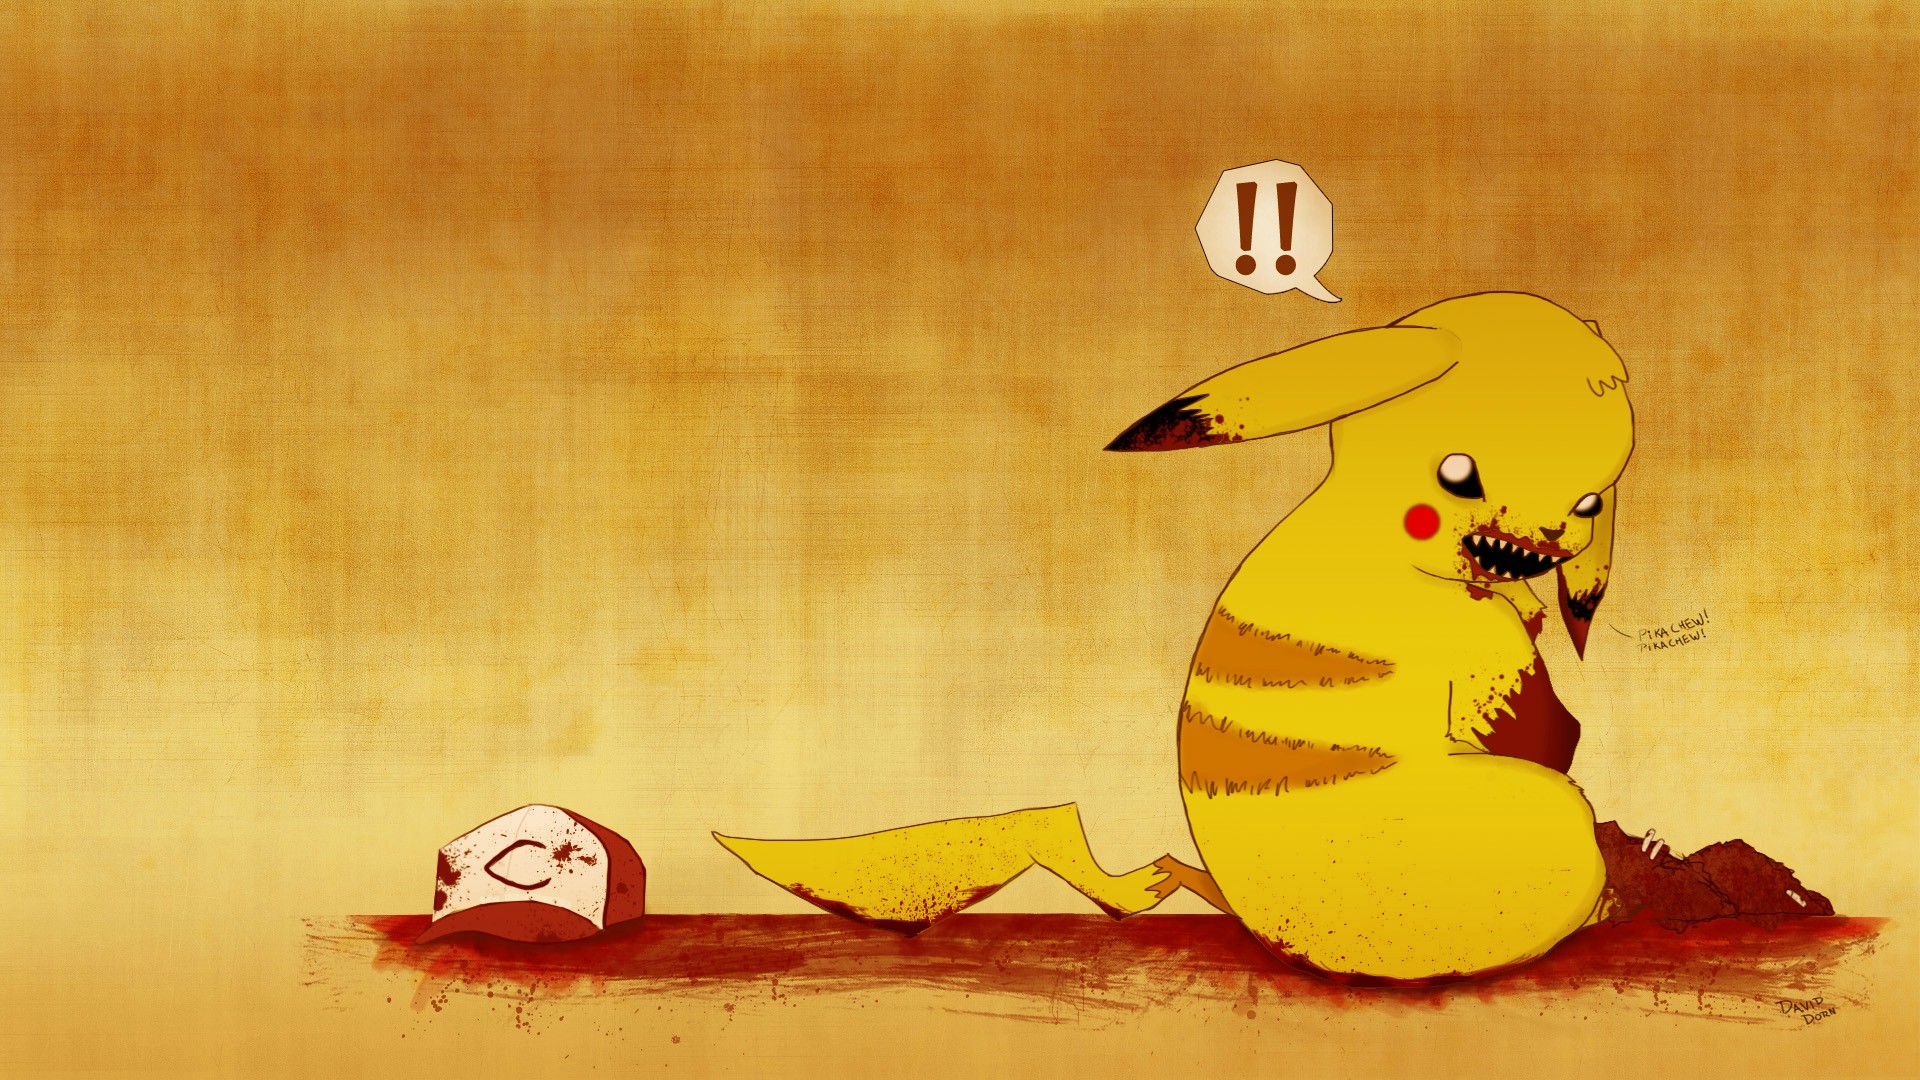 Drawn Pikachu Wallpaper - Pikachu Eating Ash - HD Wallpaper 